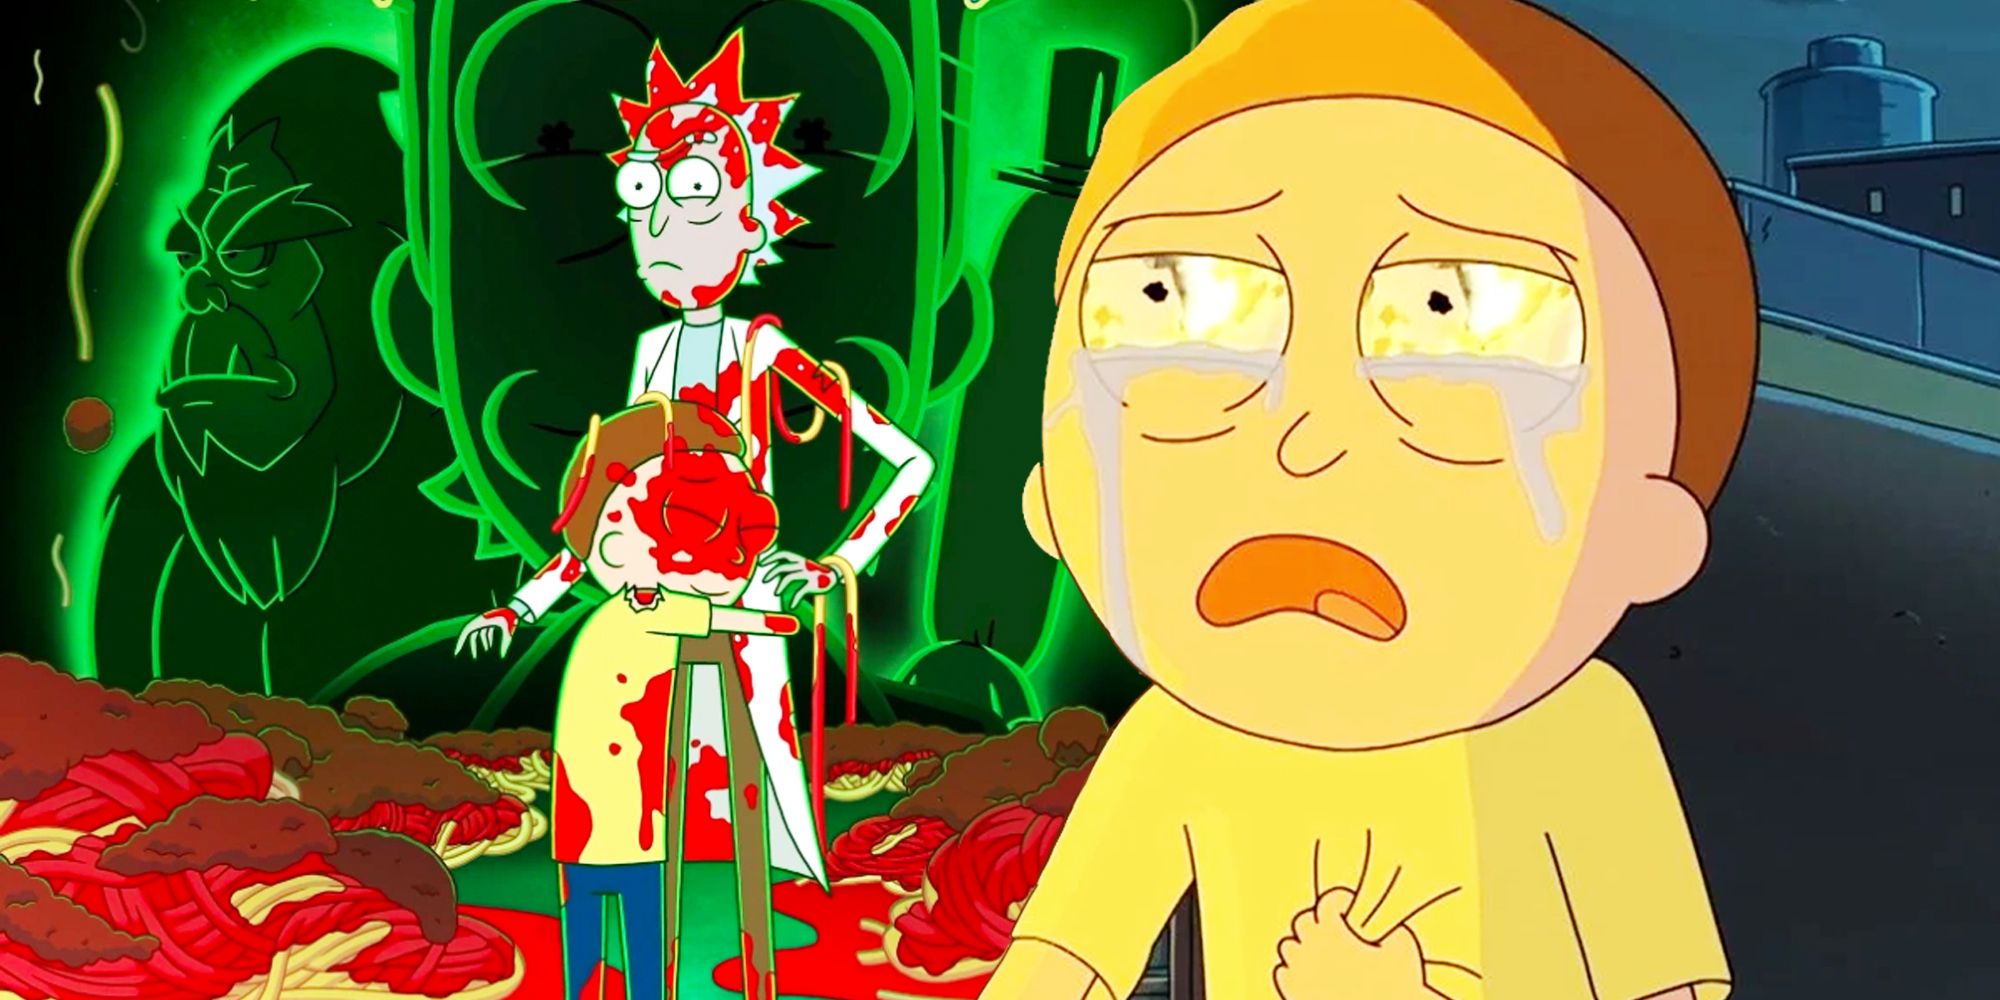 Morty and the Rick and Morty season 7 poster